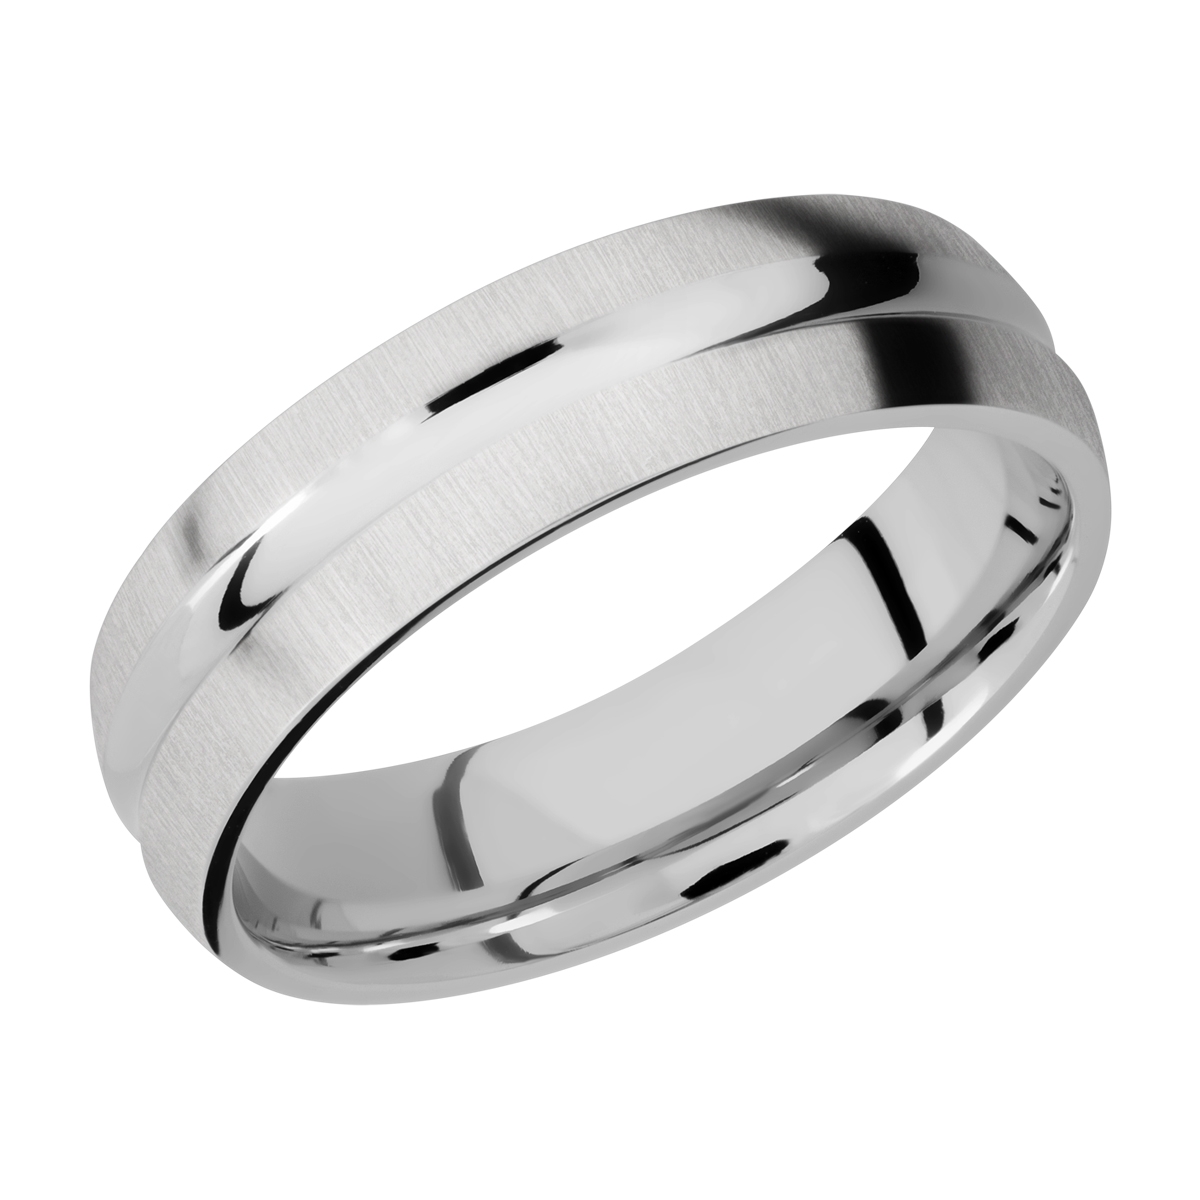 Lashbrook 6DC Titanium Wedding Ring or Band